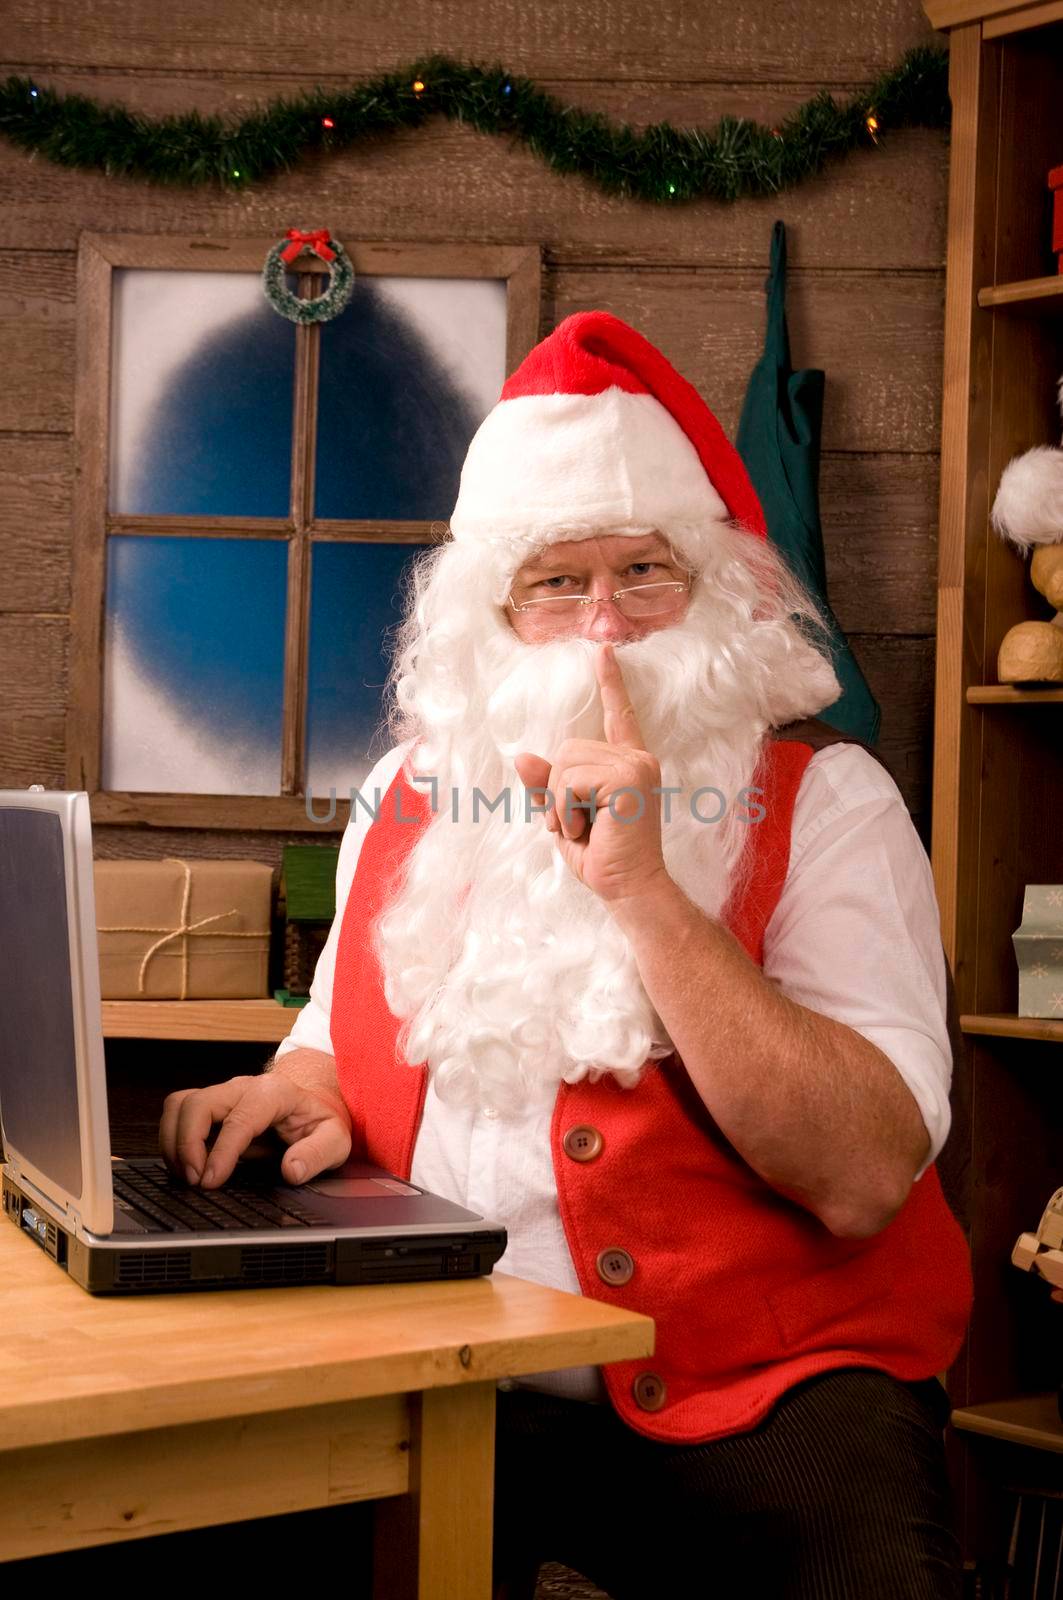 Santa Claus in Workshop Using Laptop by sCukrov